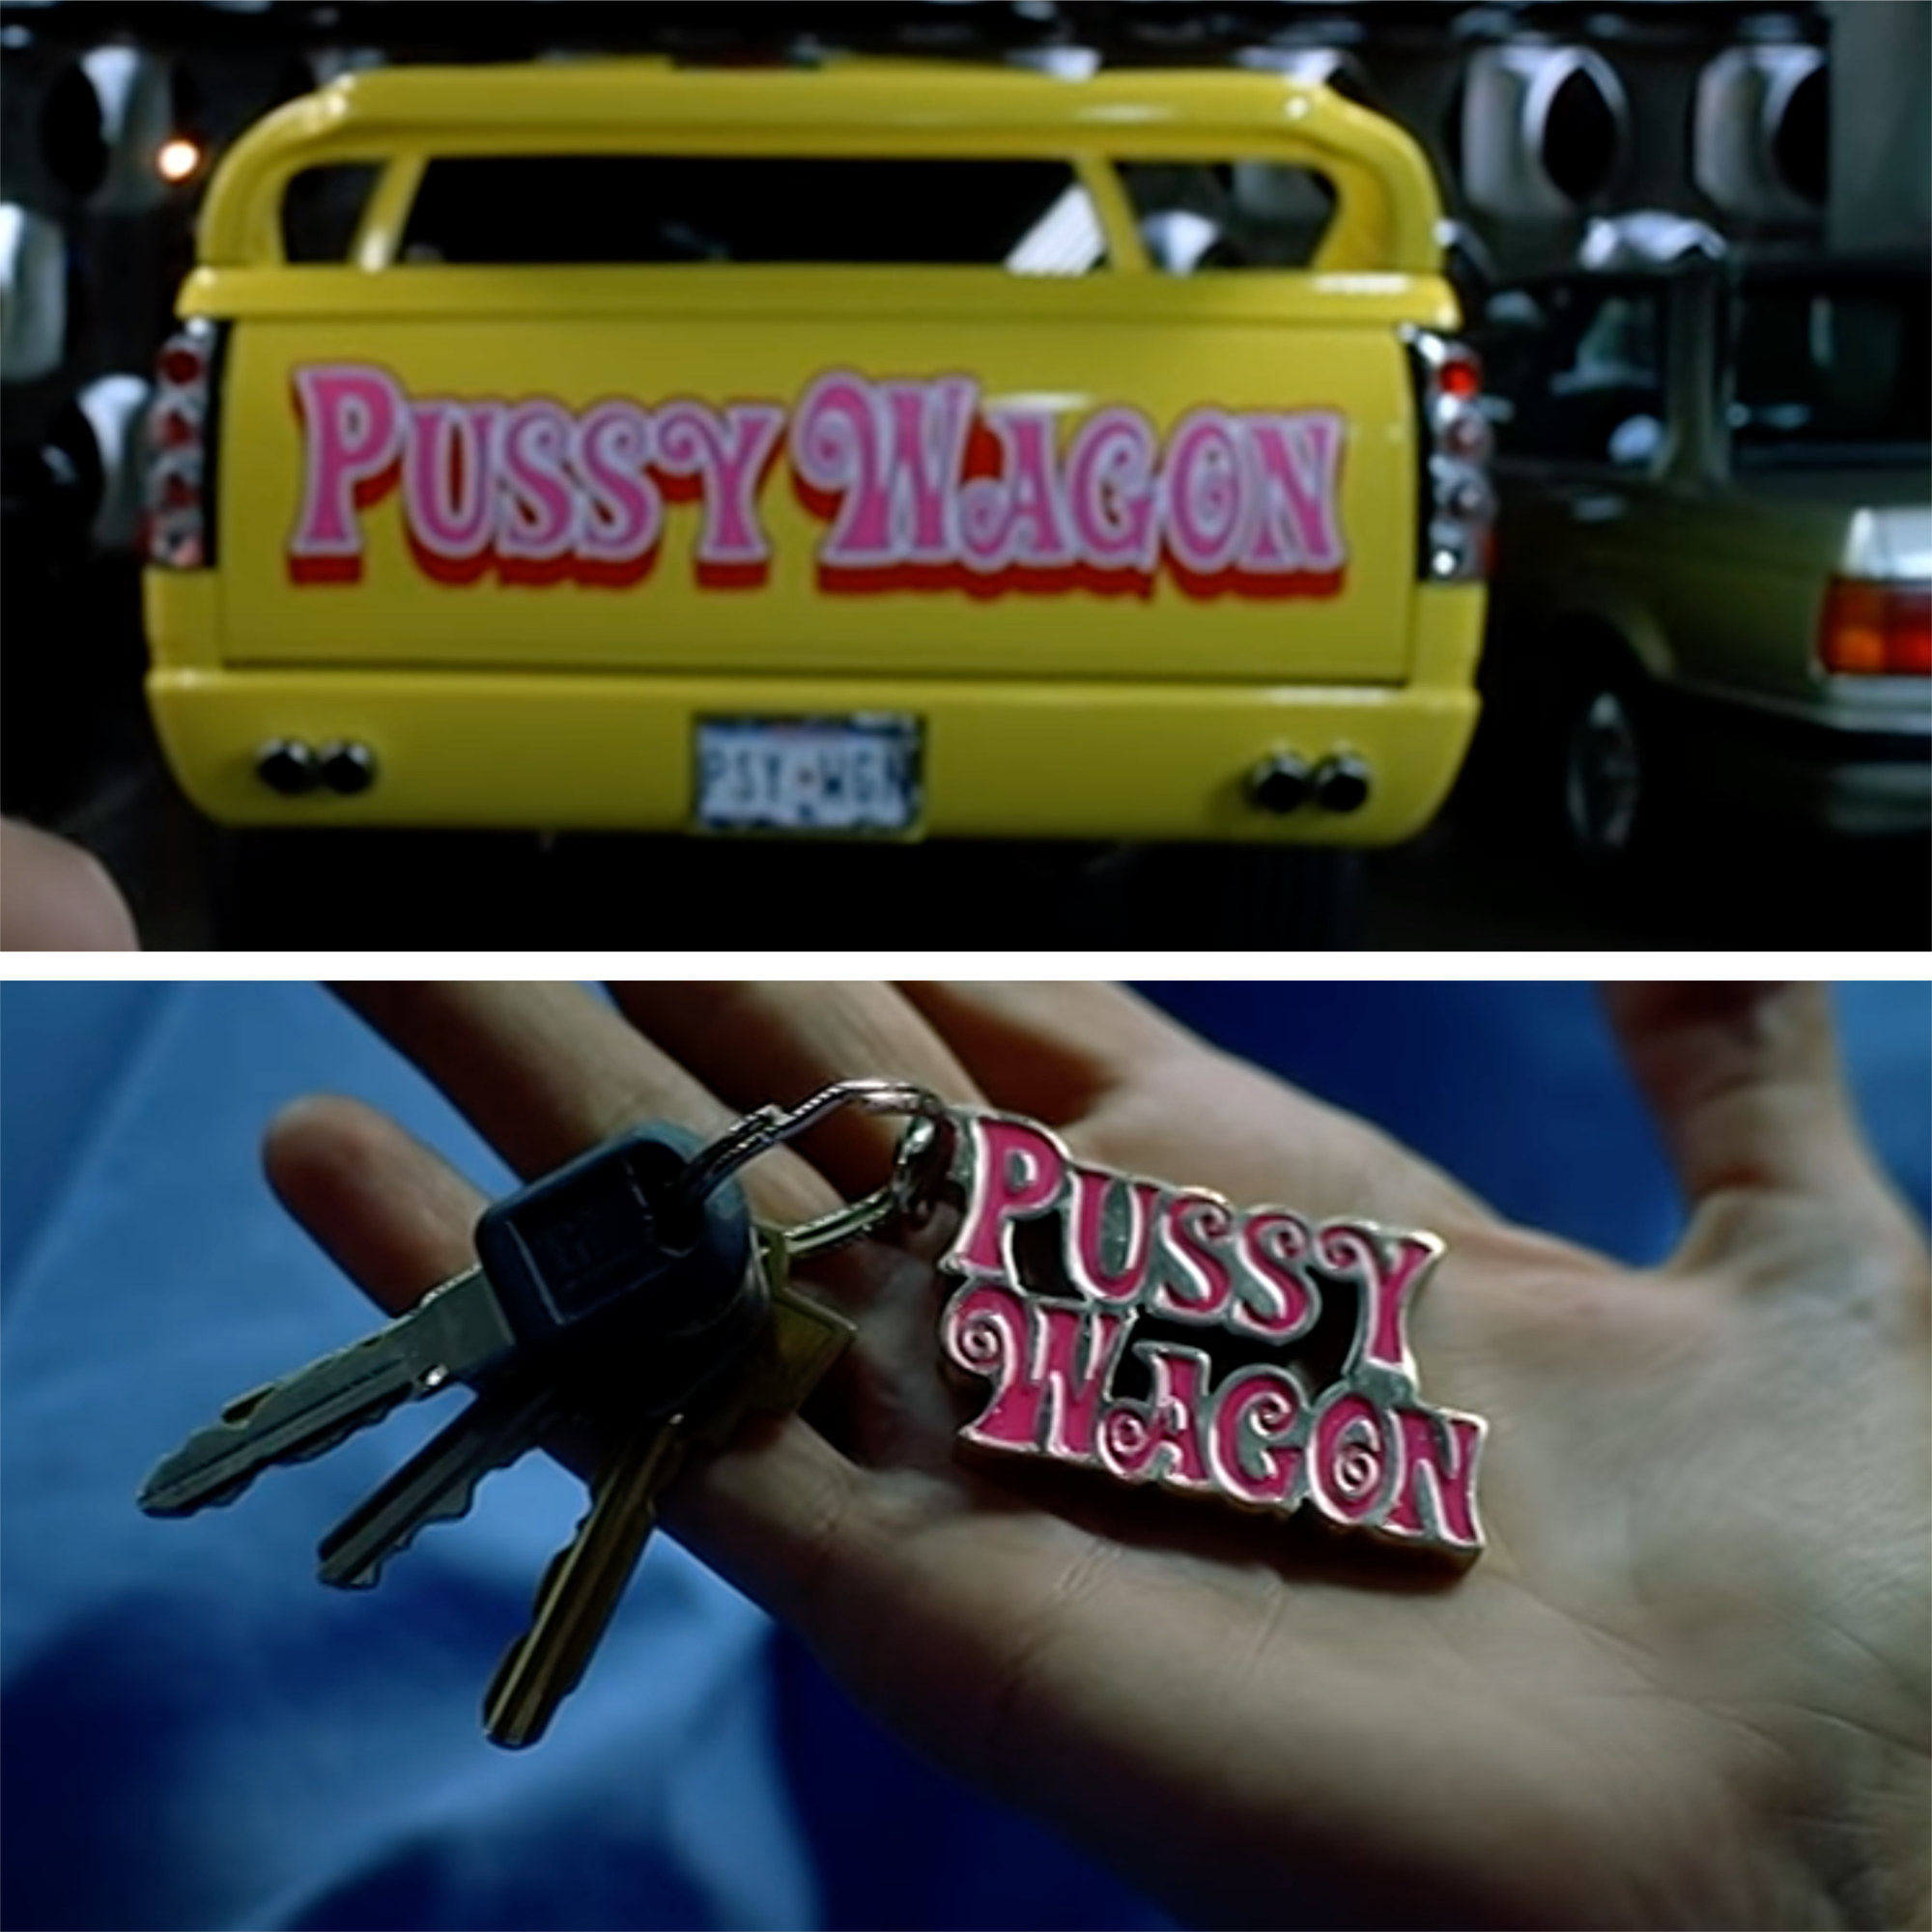 The Pussy Wagon car and key chain in Kill Bill films